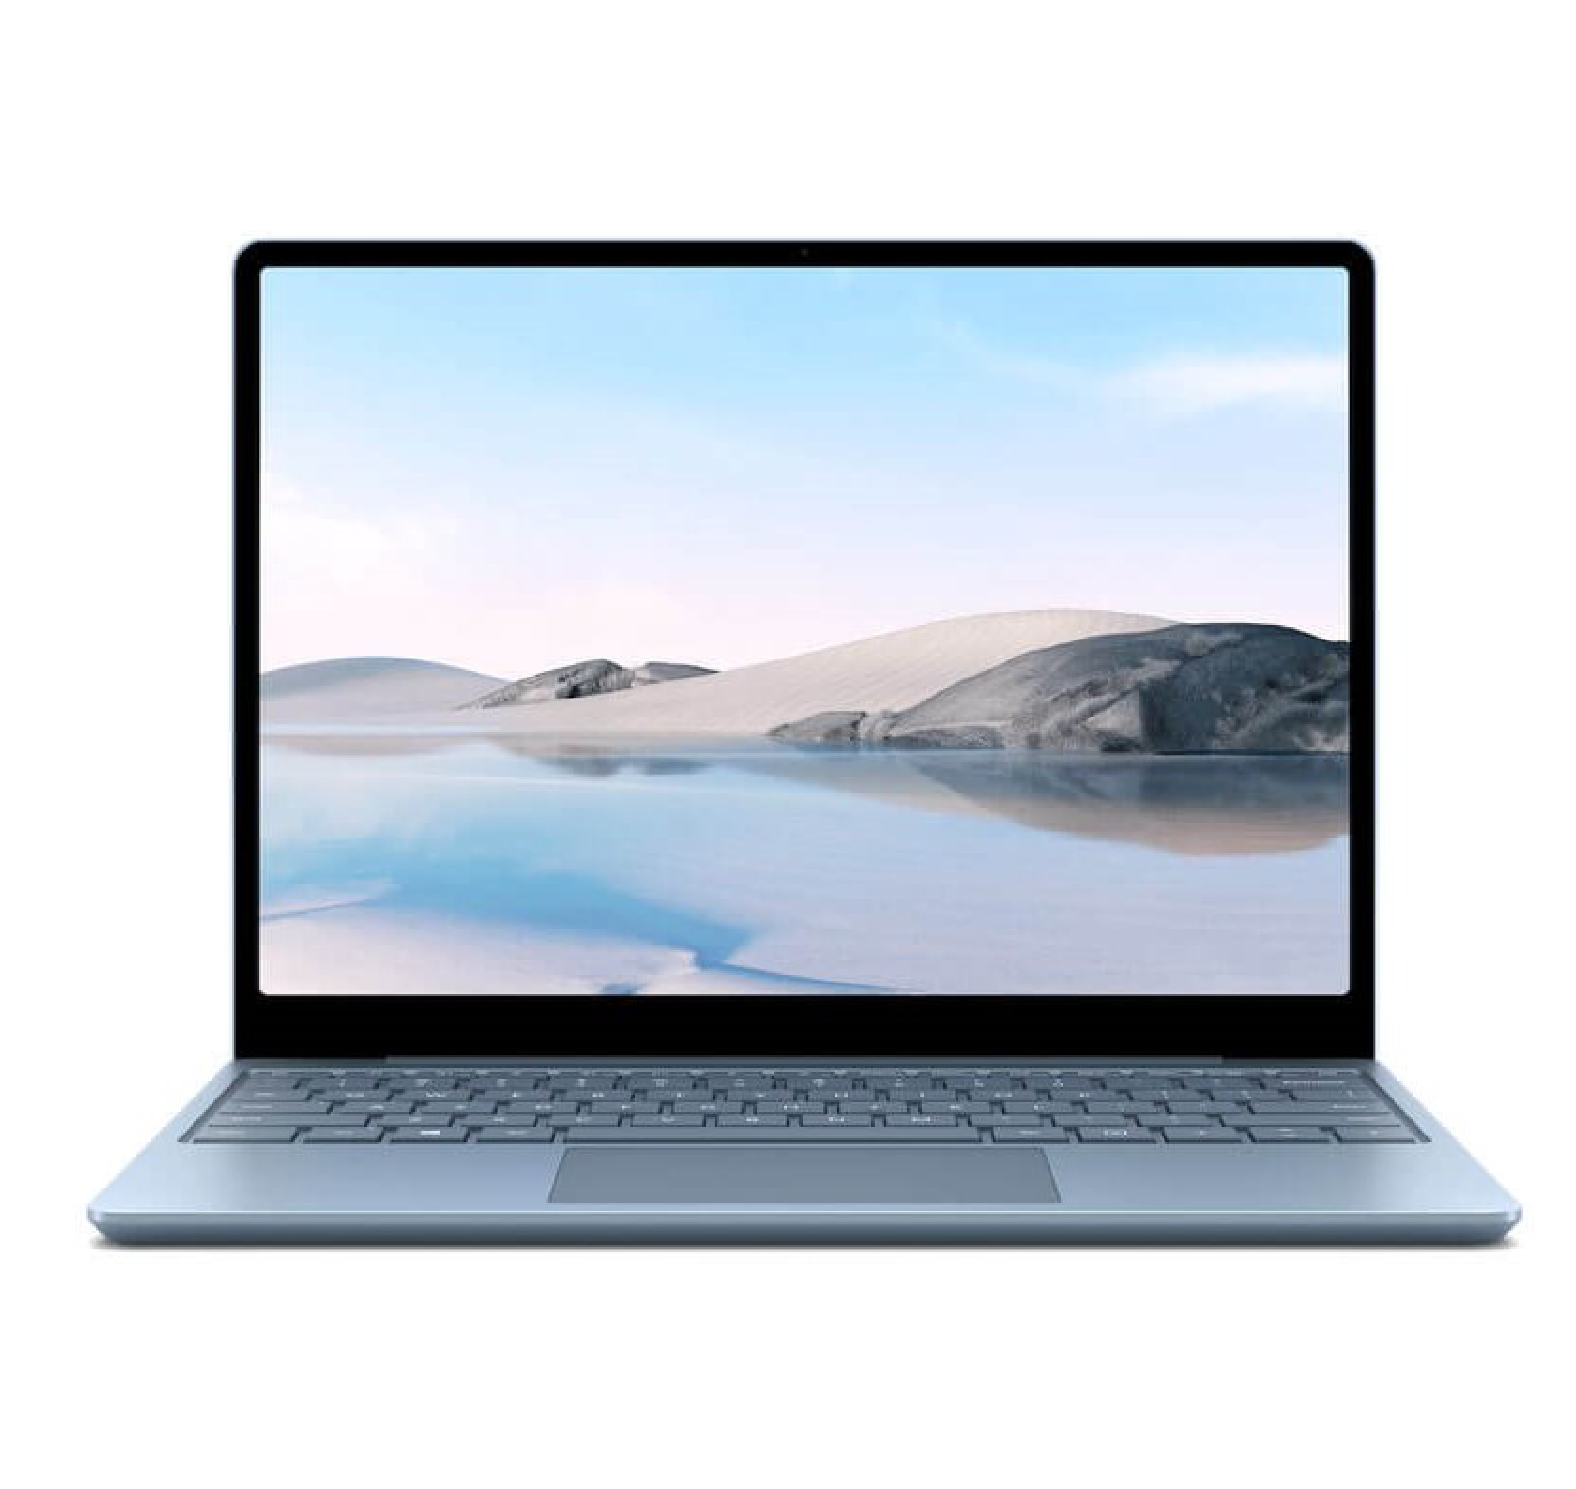 لپ تاپ مایکروسافت   Microsoft Surface Go : Core i5-1035G1 / 8GB RAM / 256GB SSD / Intel / Win 10 Home thumb 757